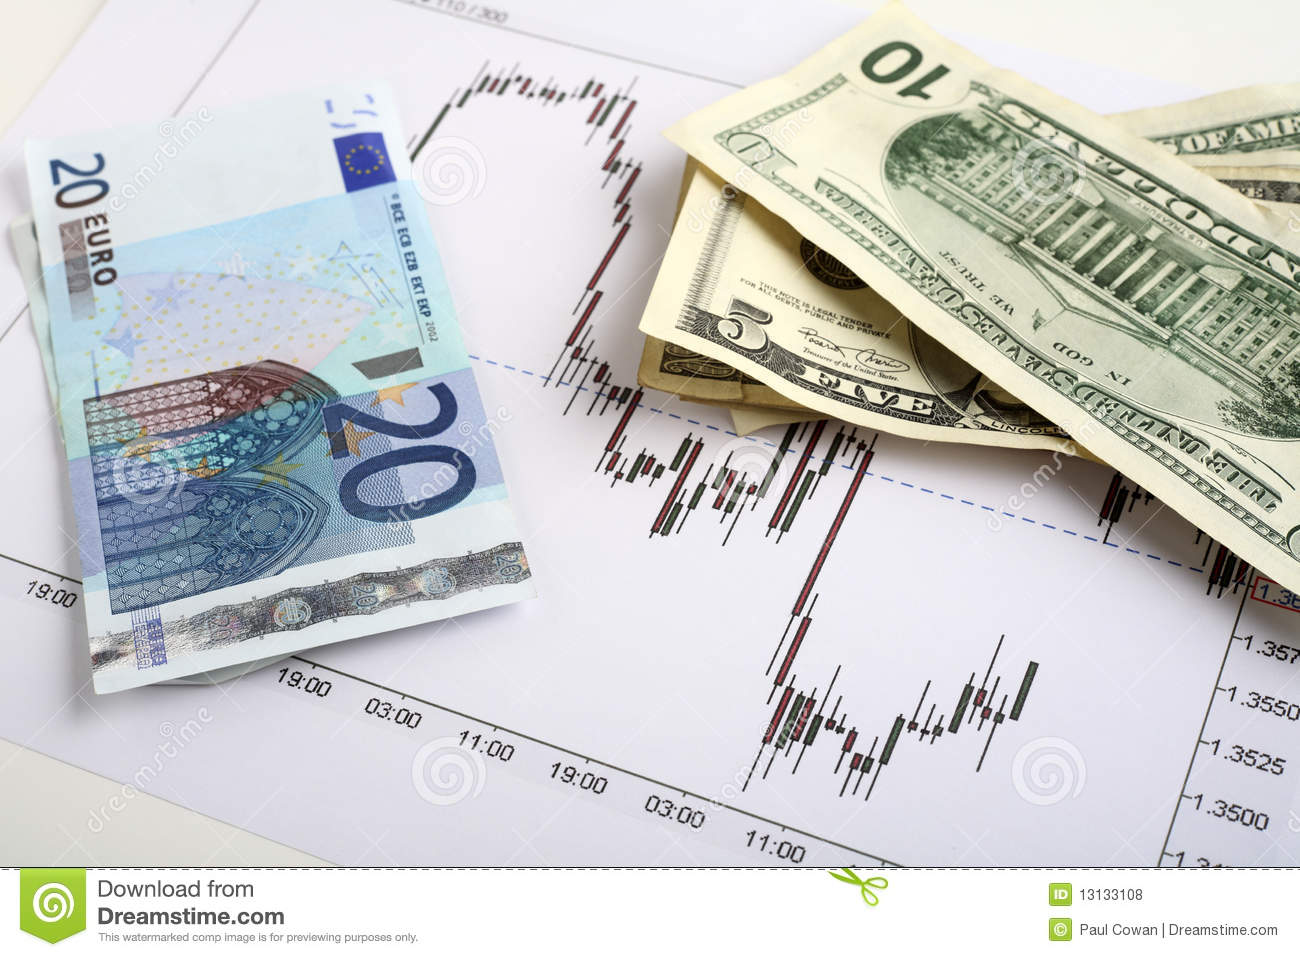 dollar-euro-forex-trading-13133108.jpg